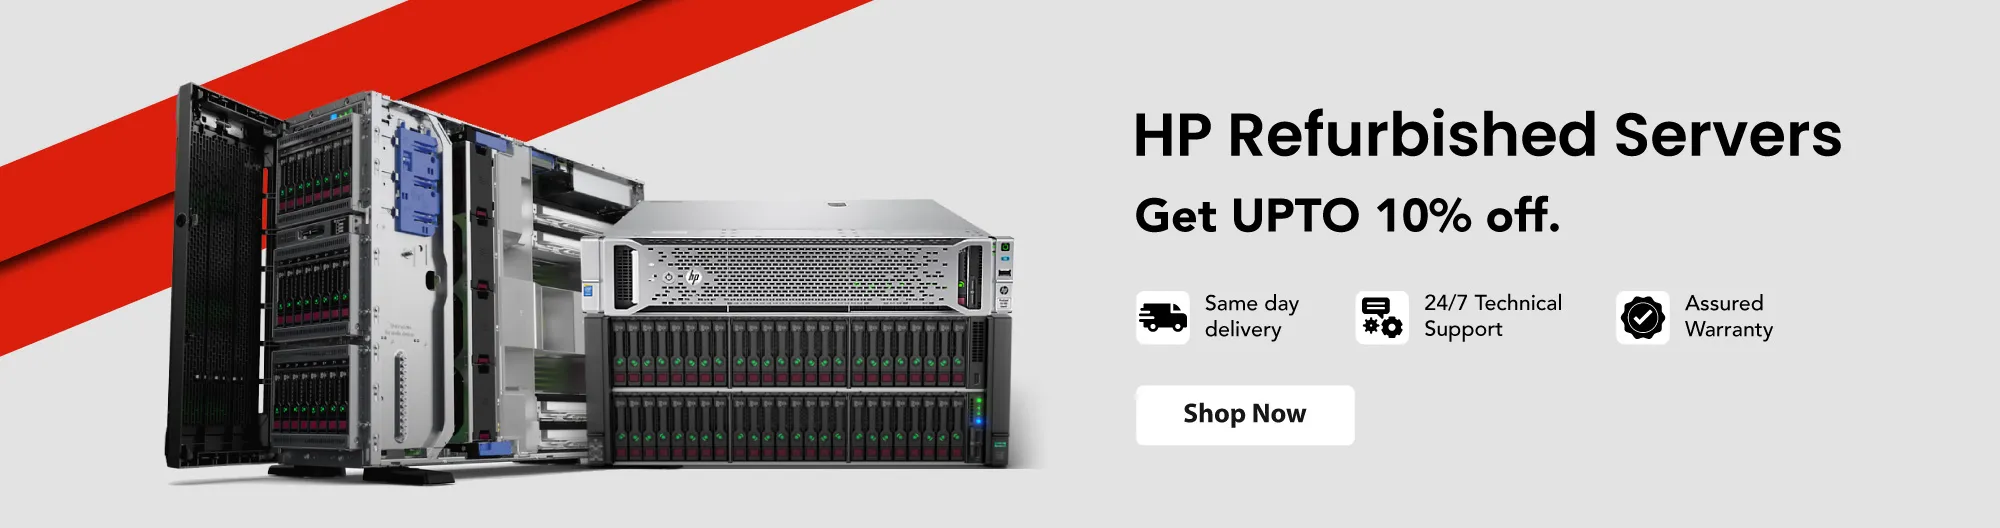 HP Refurb Servers